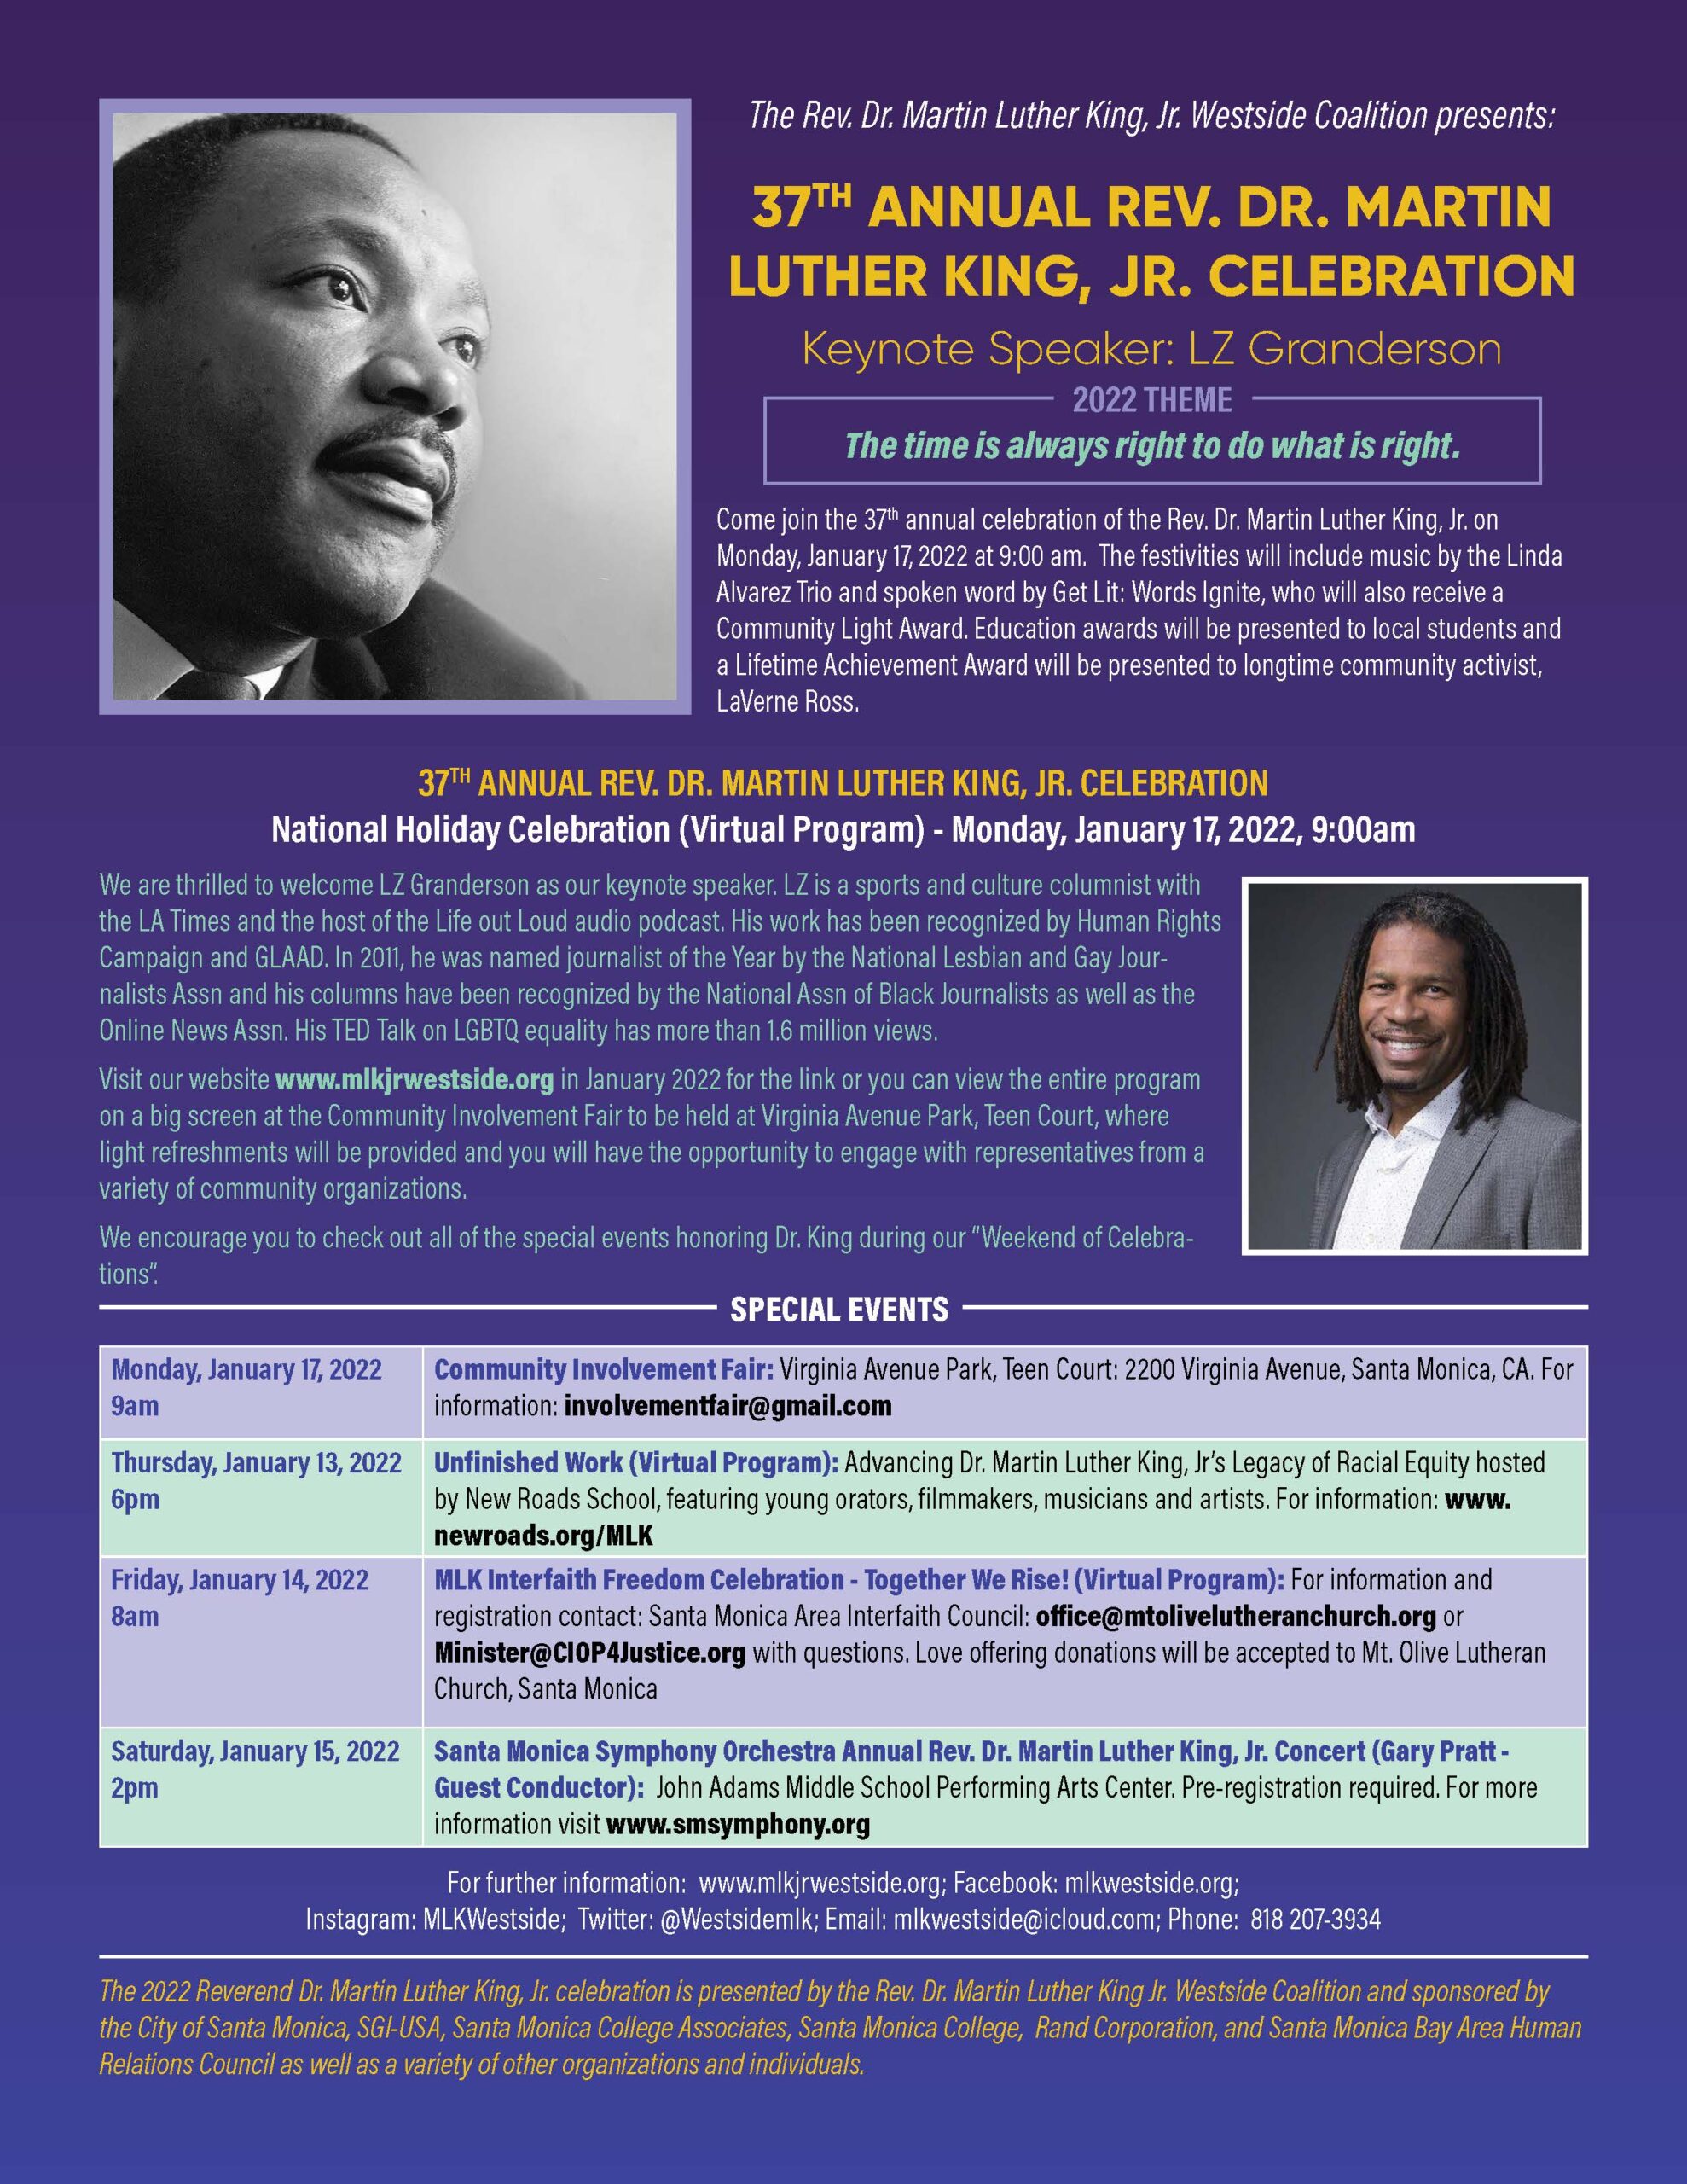 37th Annual Rev. Dr. Martin Luther King, Jr. Celebration